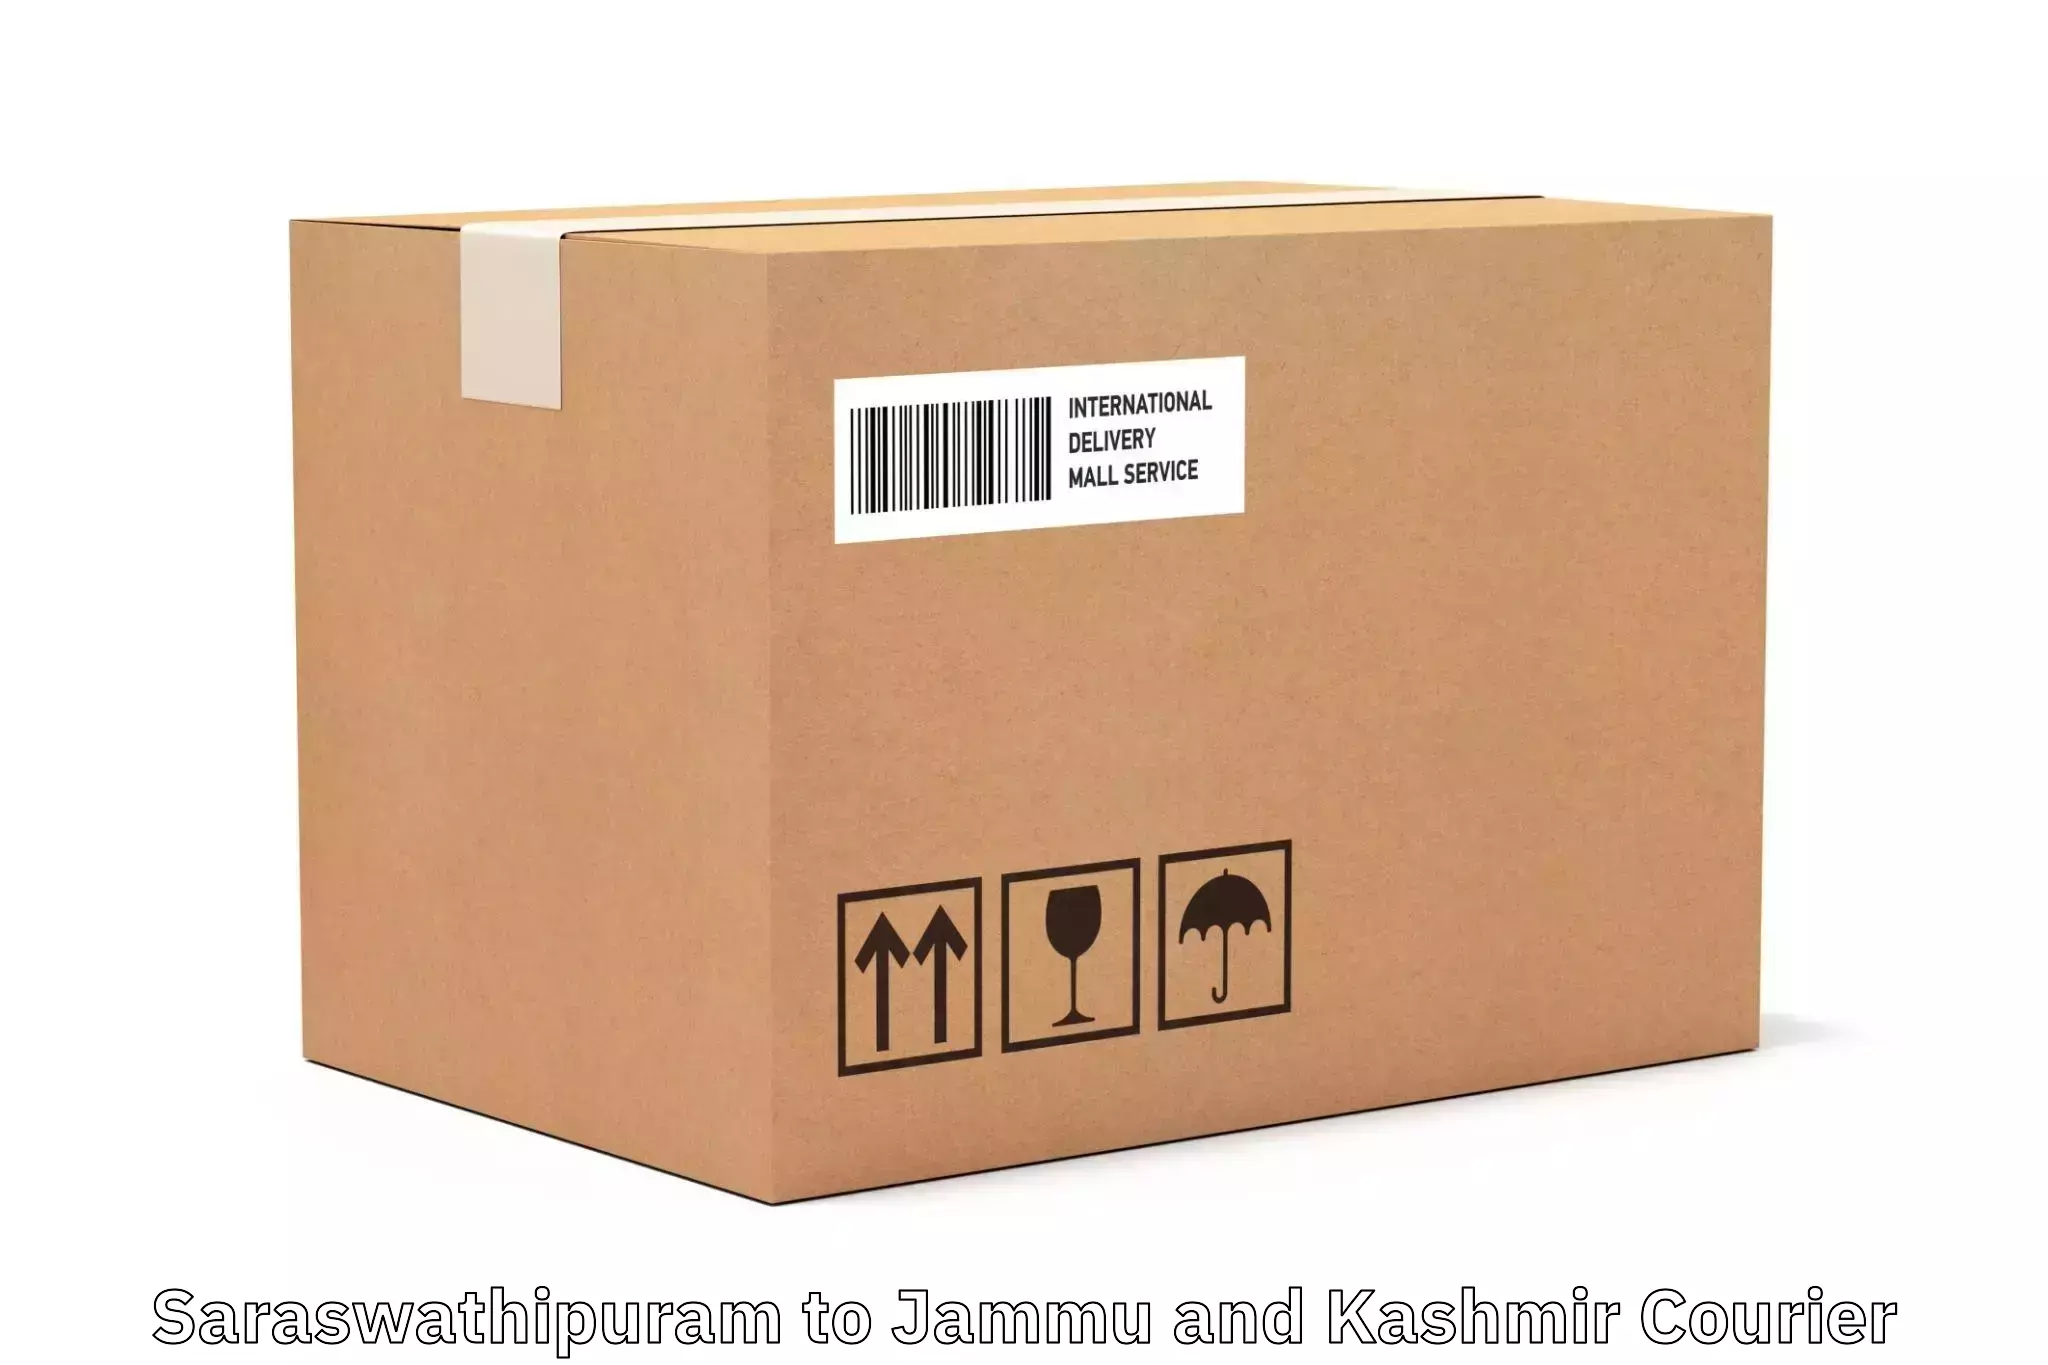 State-of-the-art courier technology Saraswathipuram to Jammu and Kashmir